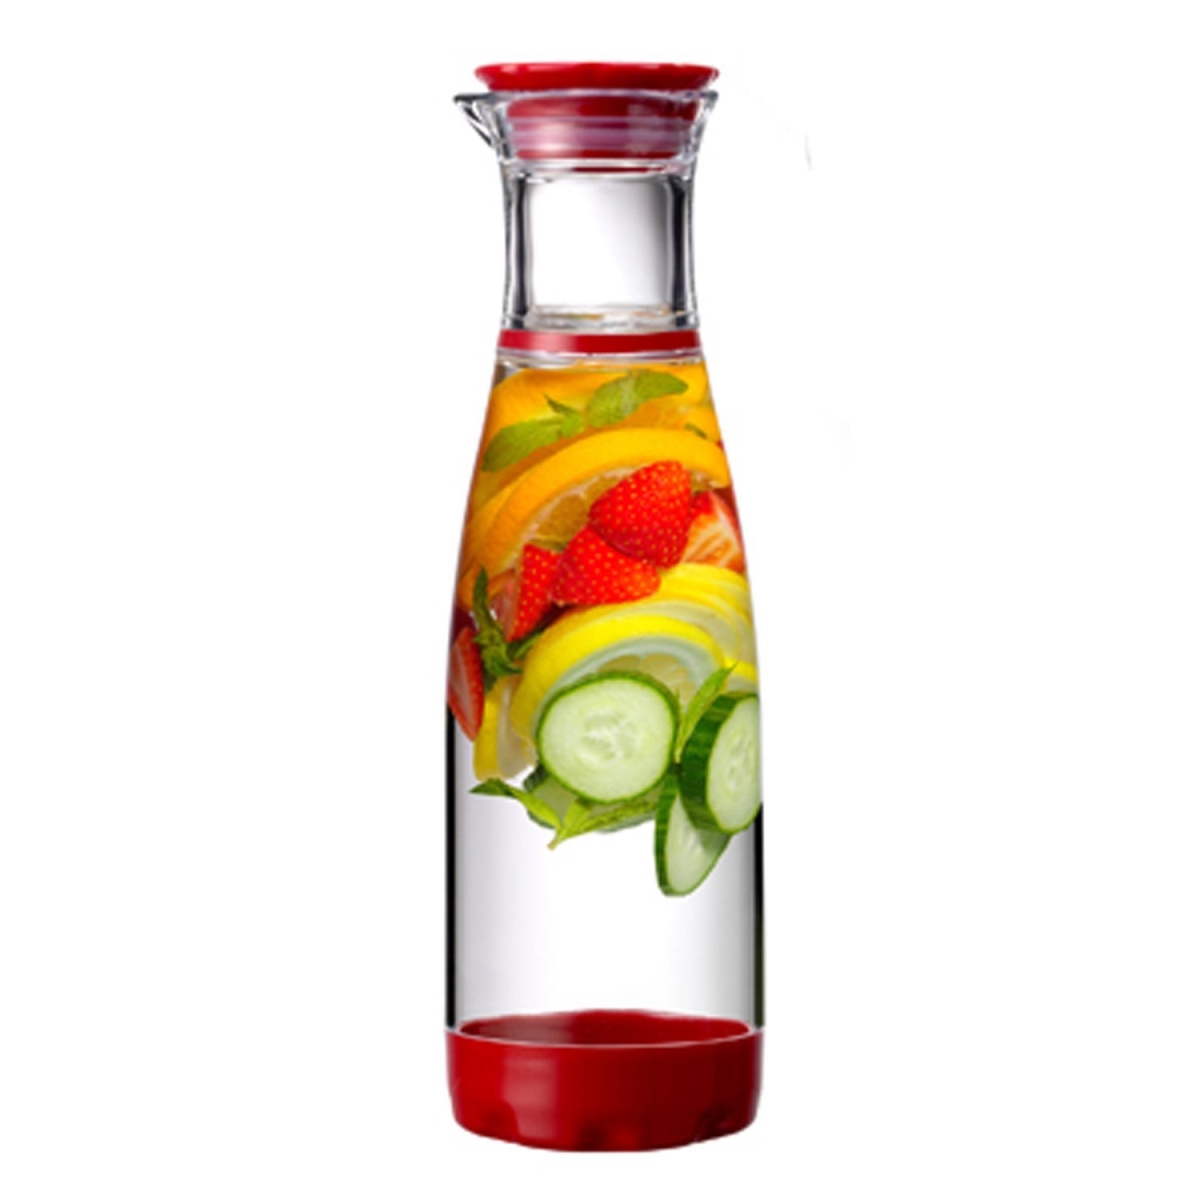 Fruit Infusion Flavor Jar, Red